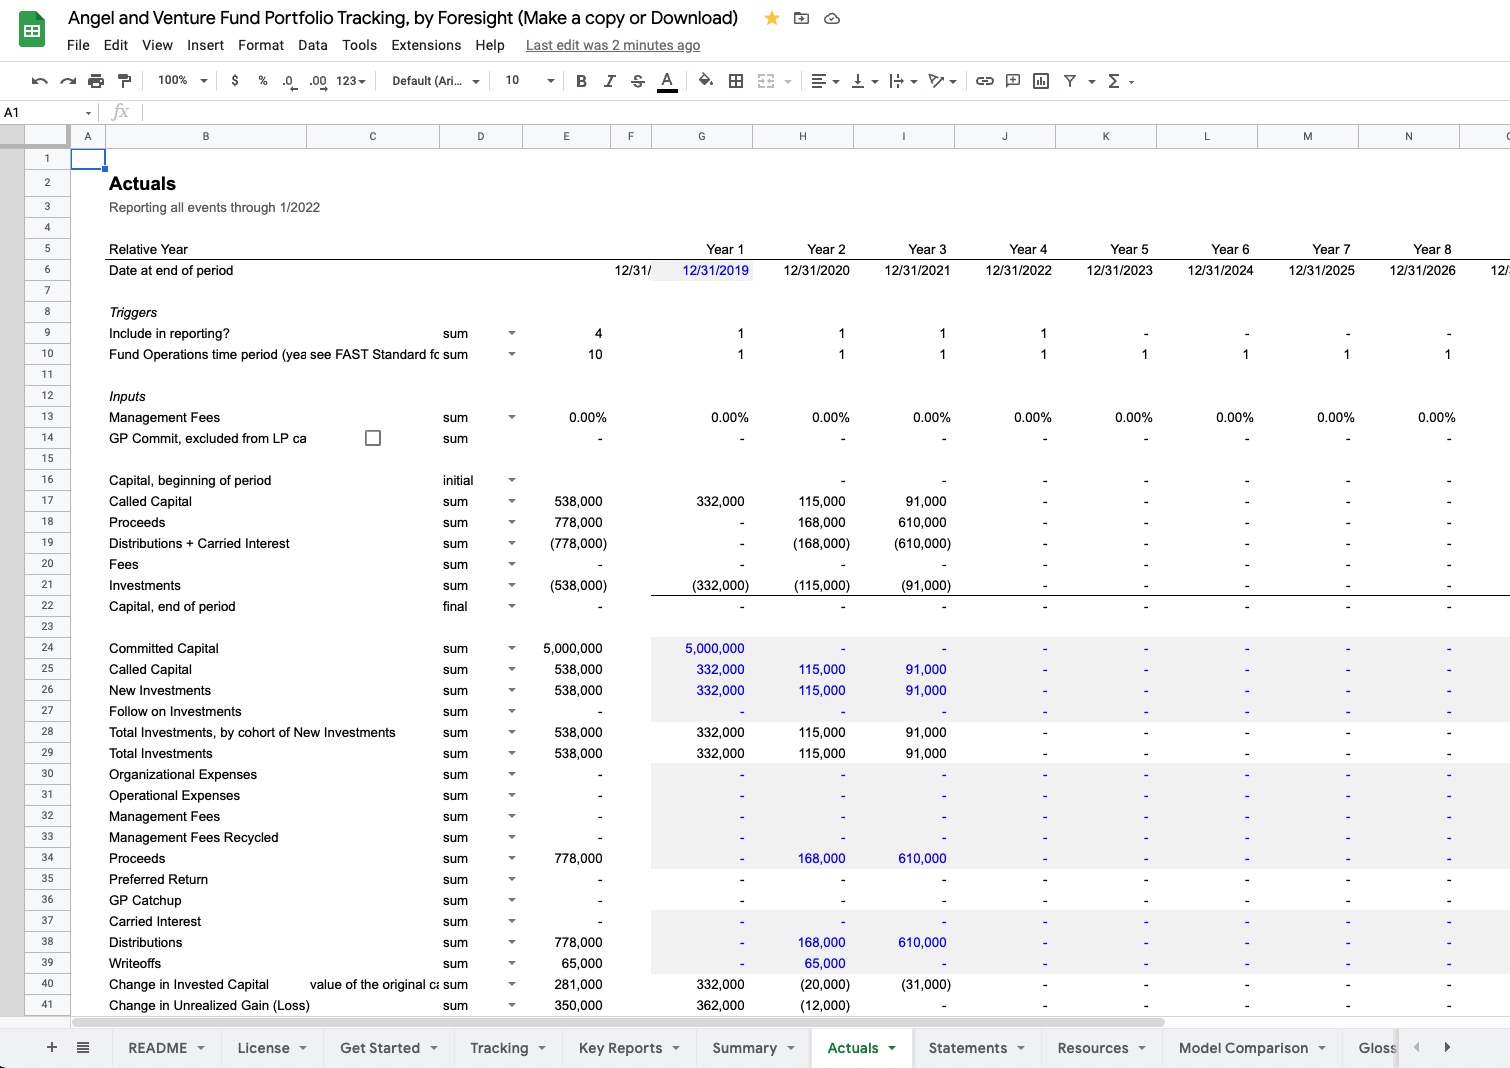 Angel And Venture Fund Portfolio Tracking Screenshot